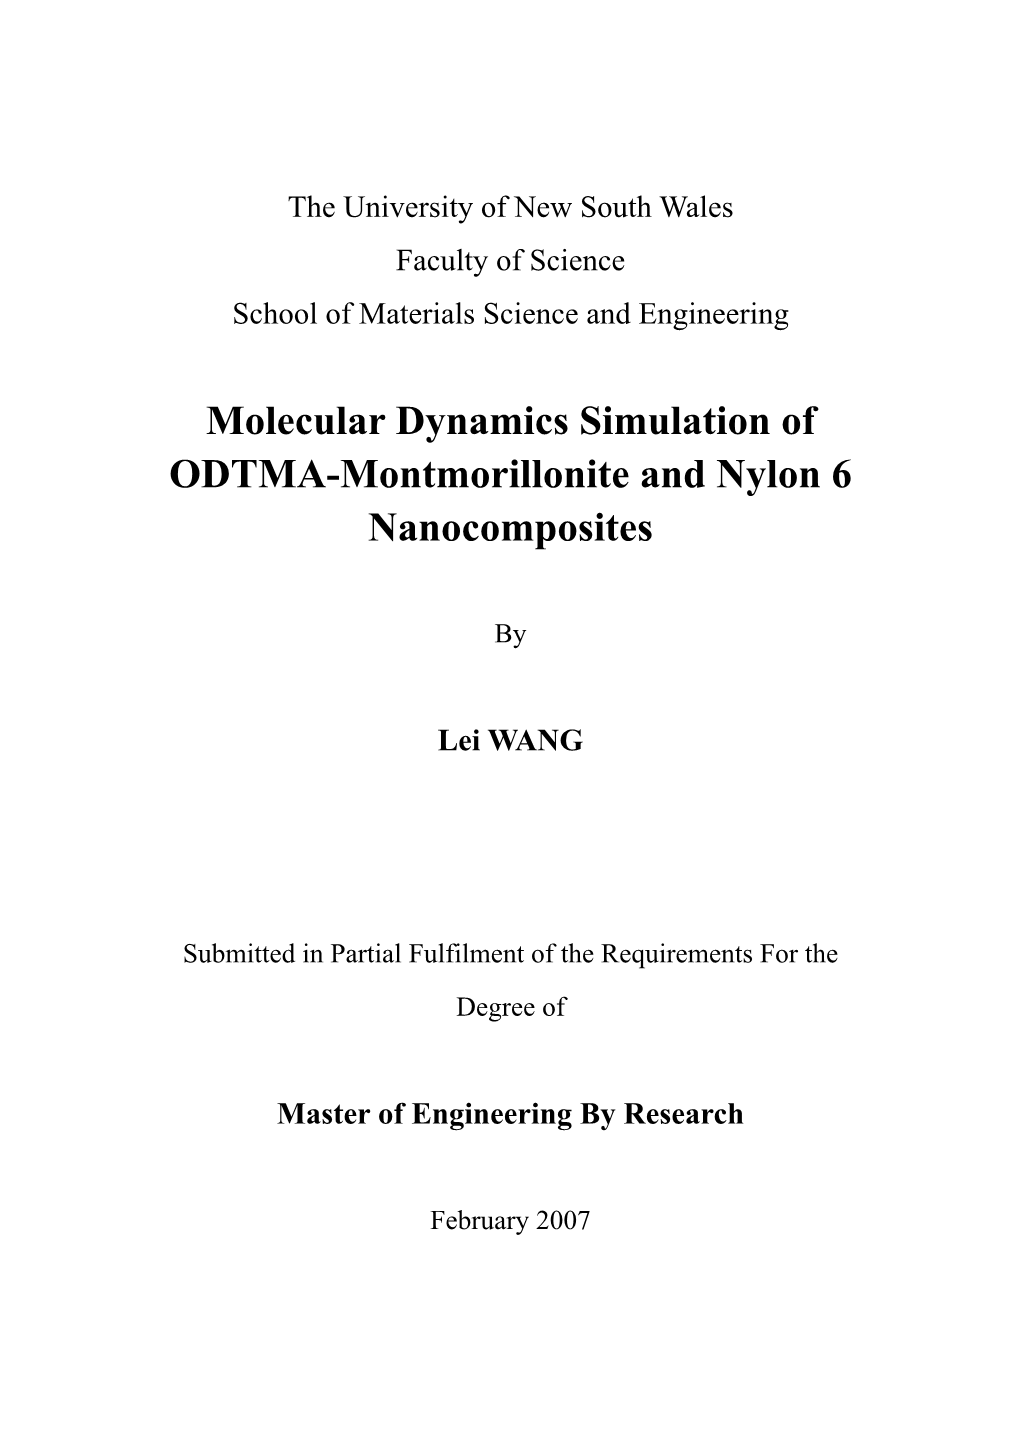 Molecular Dynamics Simulation of ODTMA-Montmorillonite and Nylon 6 Nanocomposites